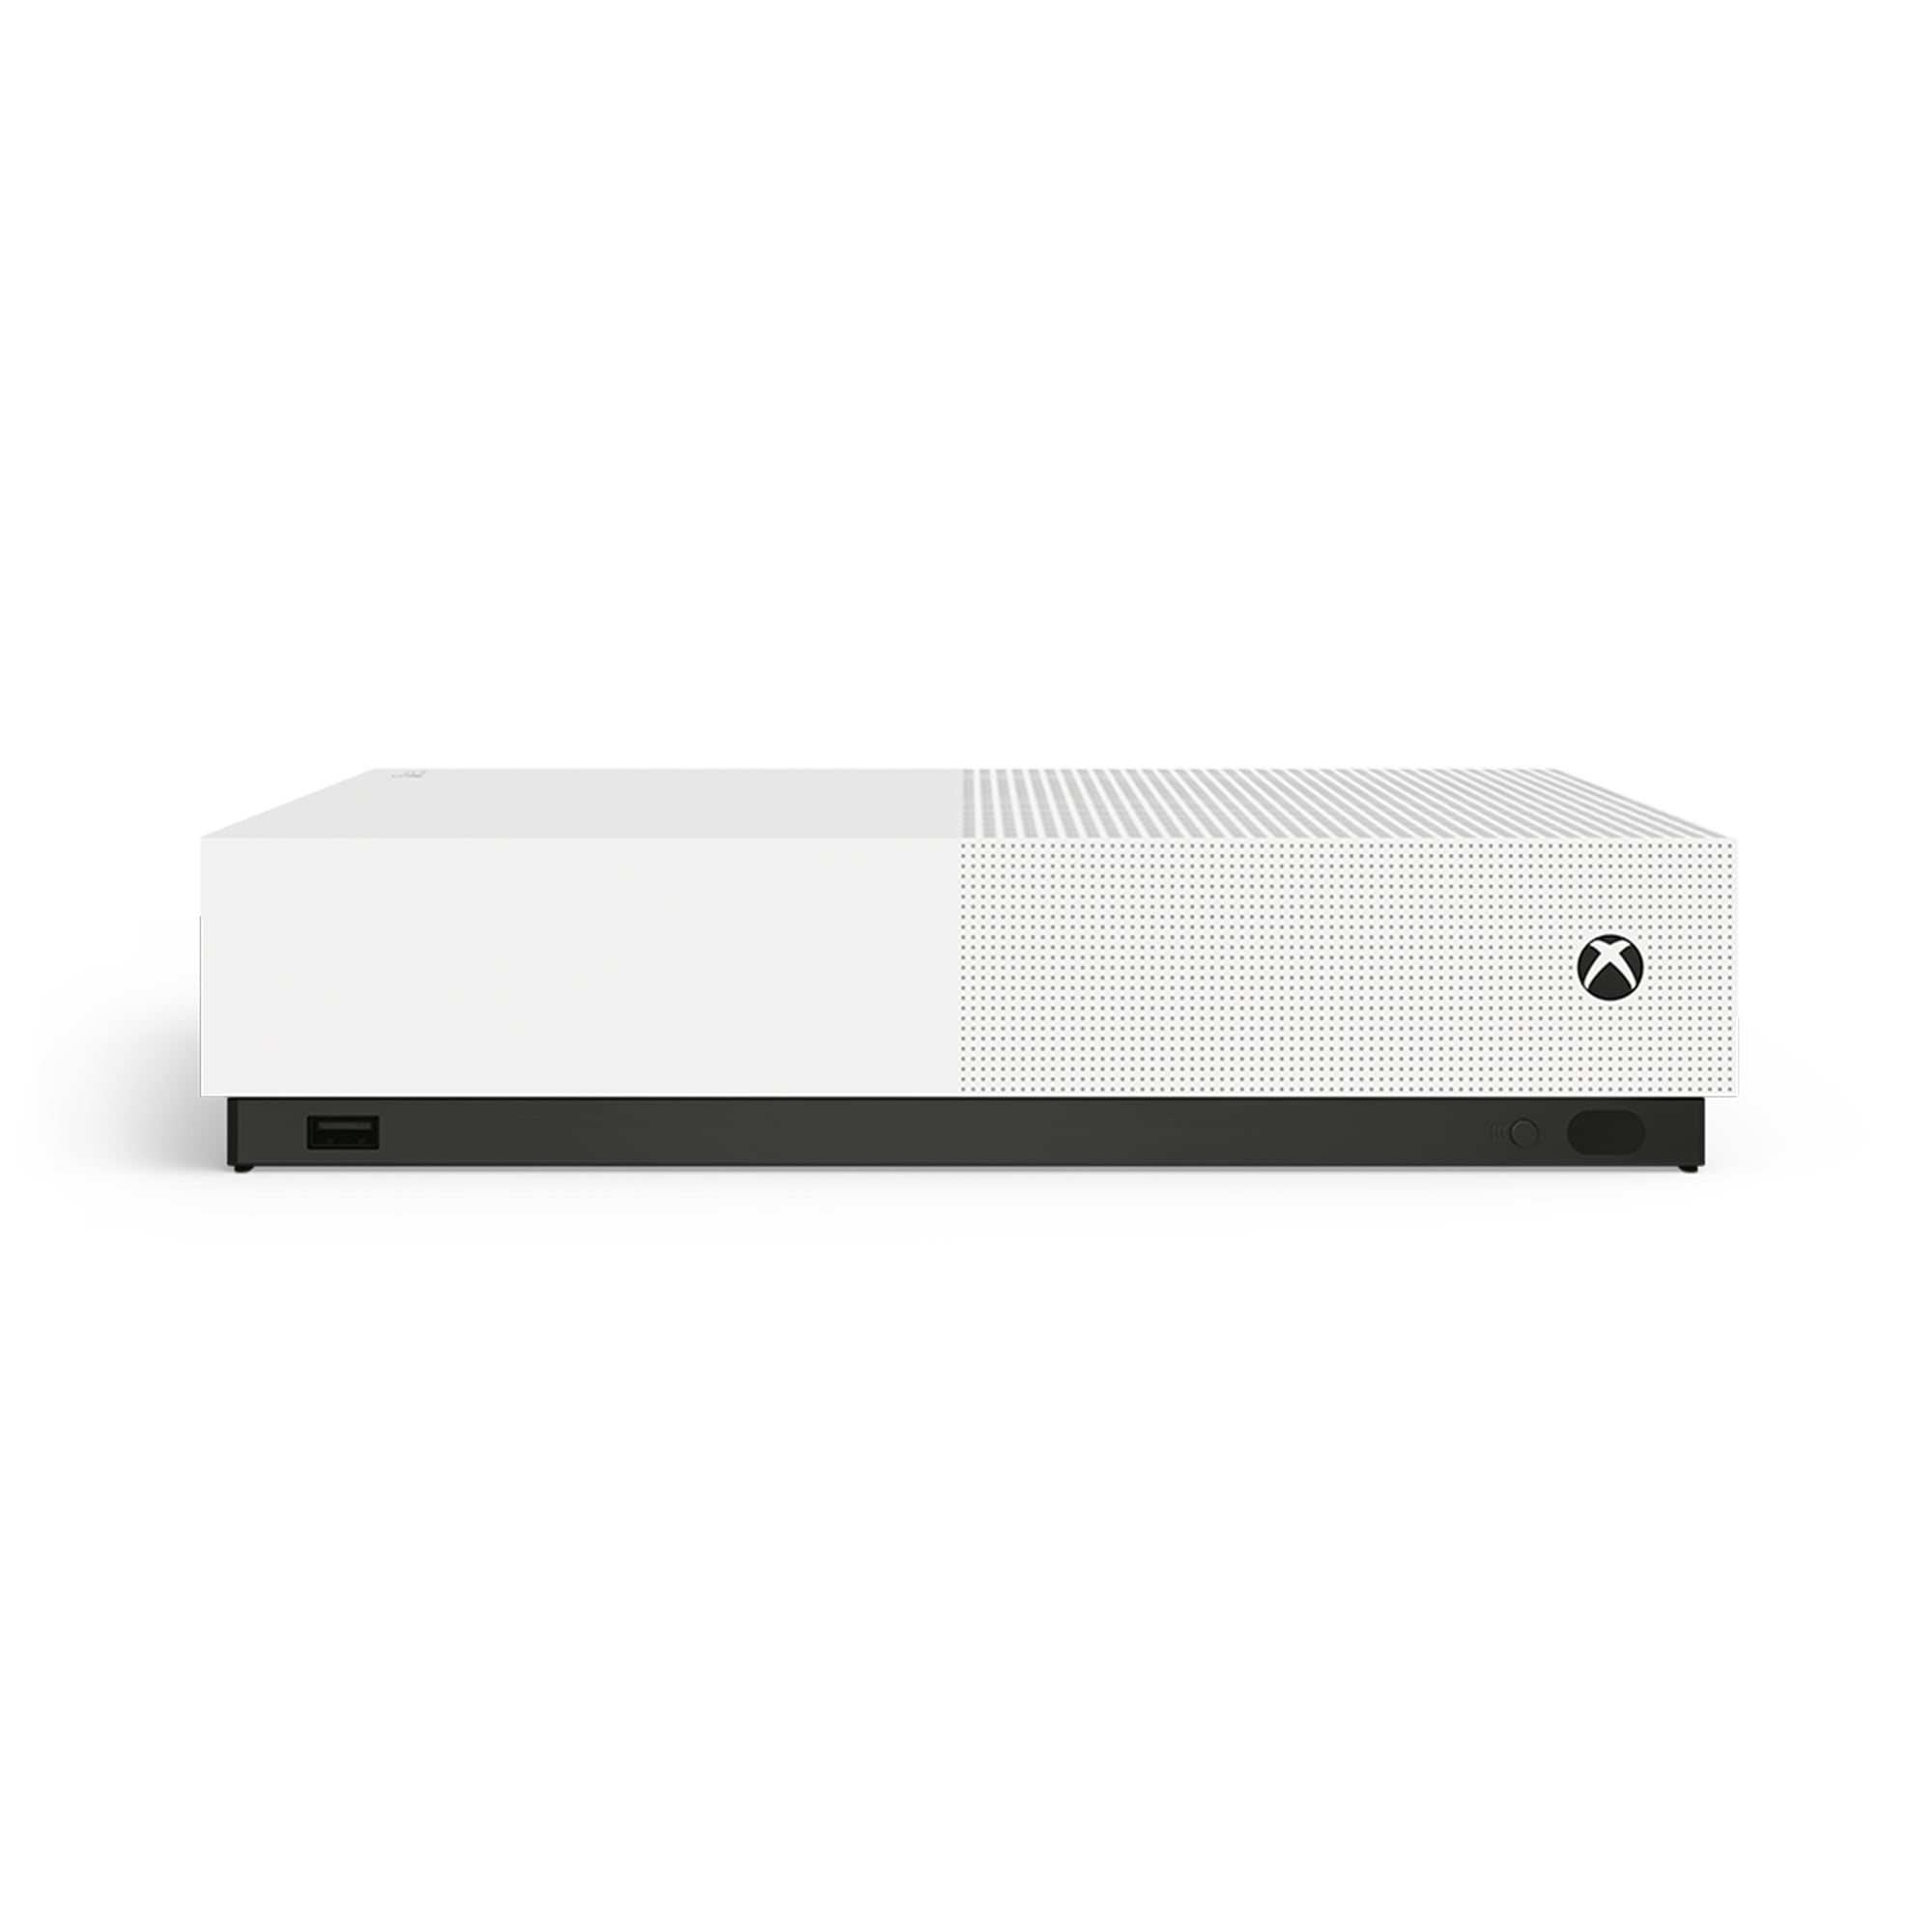 Xbox One S All-Digital Edition vindo pro Brasil - Xbox Drops 